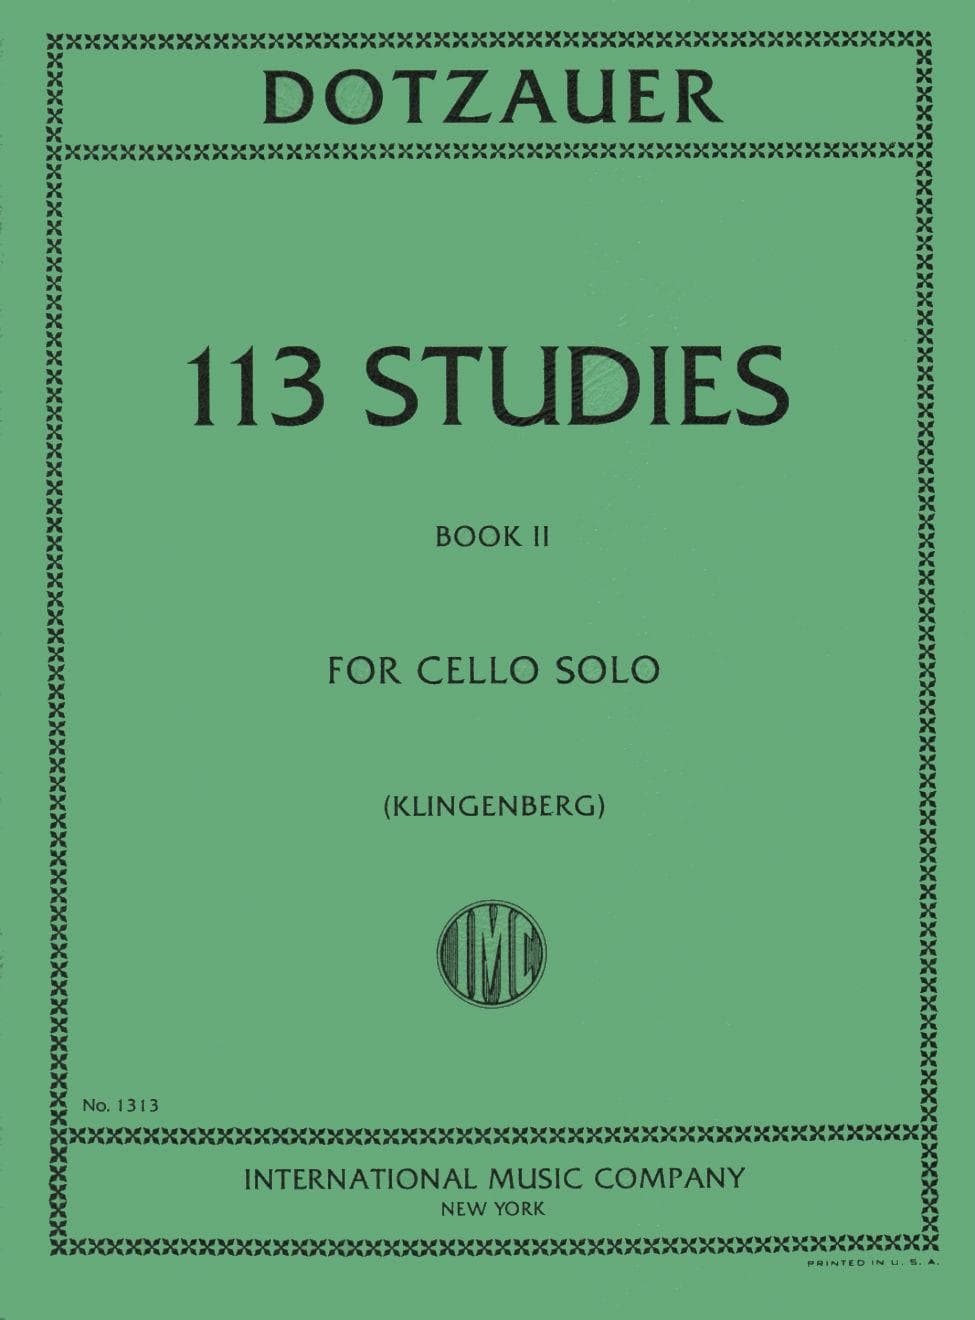 Dotzauer, J Friedrich - 113 Studies for Solo Cello, Volume 2 (Nos 35-62) - edited by Johannes Klingenberg - International Edition